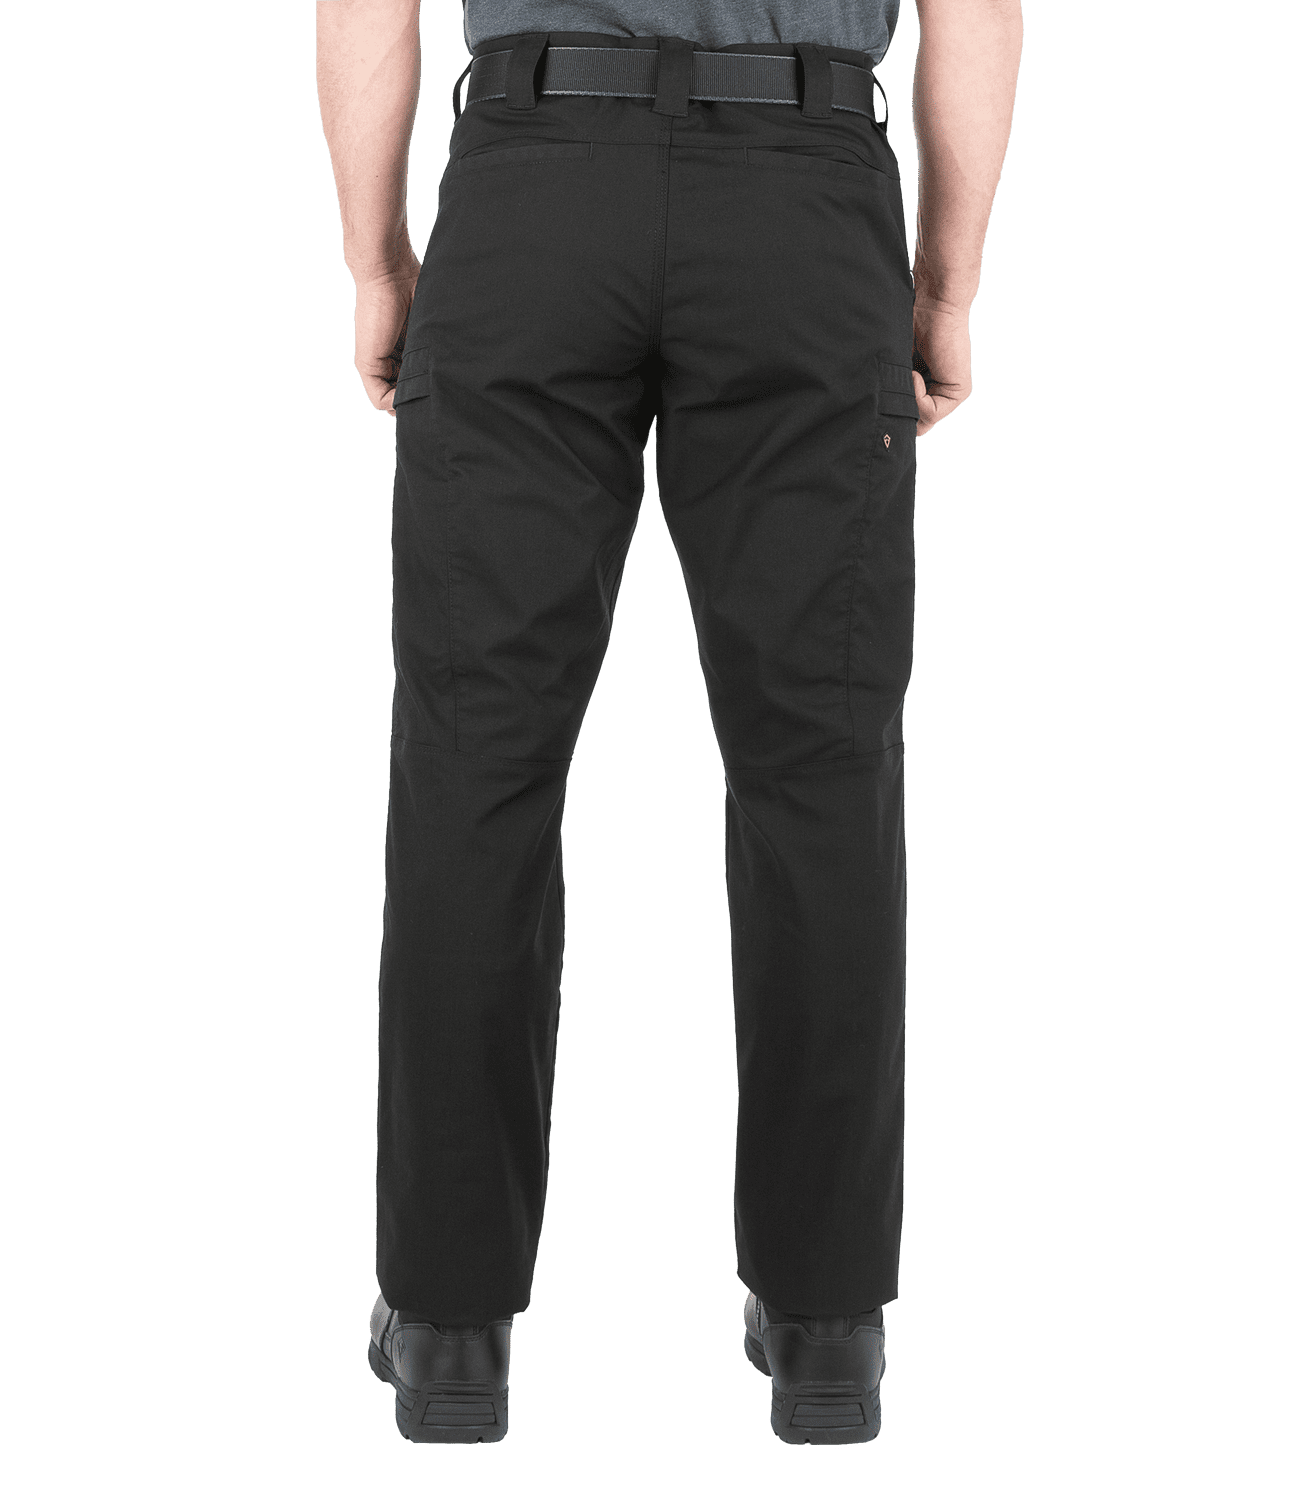 First Tactical Men's A2 Pant, Black - COPS Products